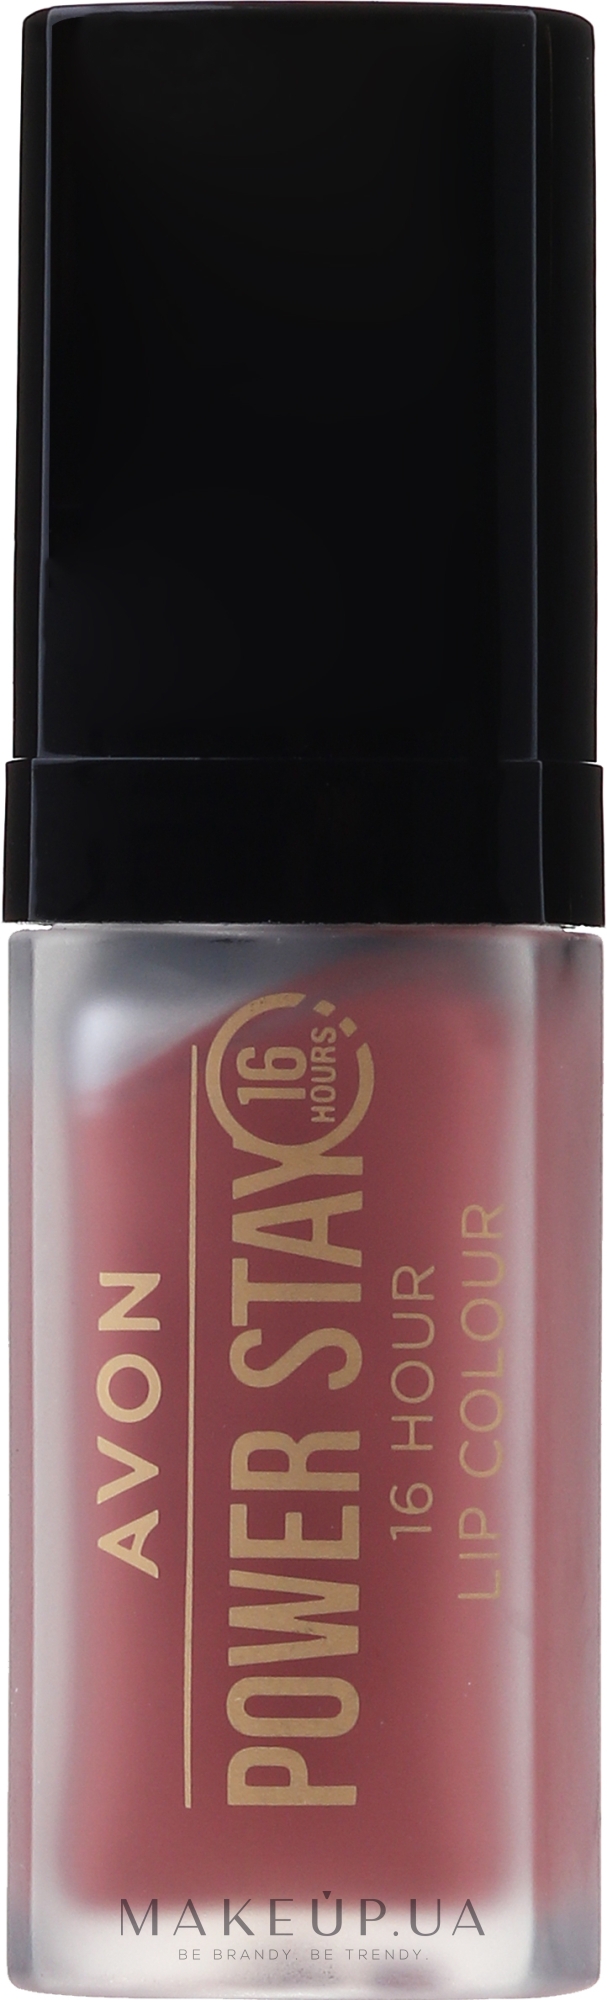 Avon Power Stay 16-Hour Matte Lip Color